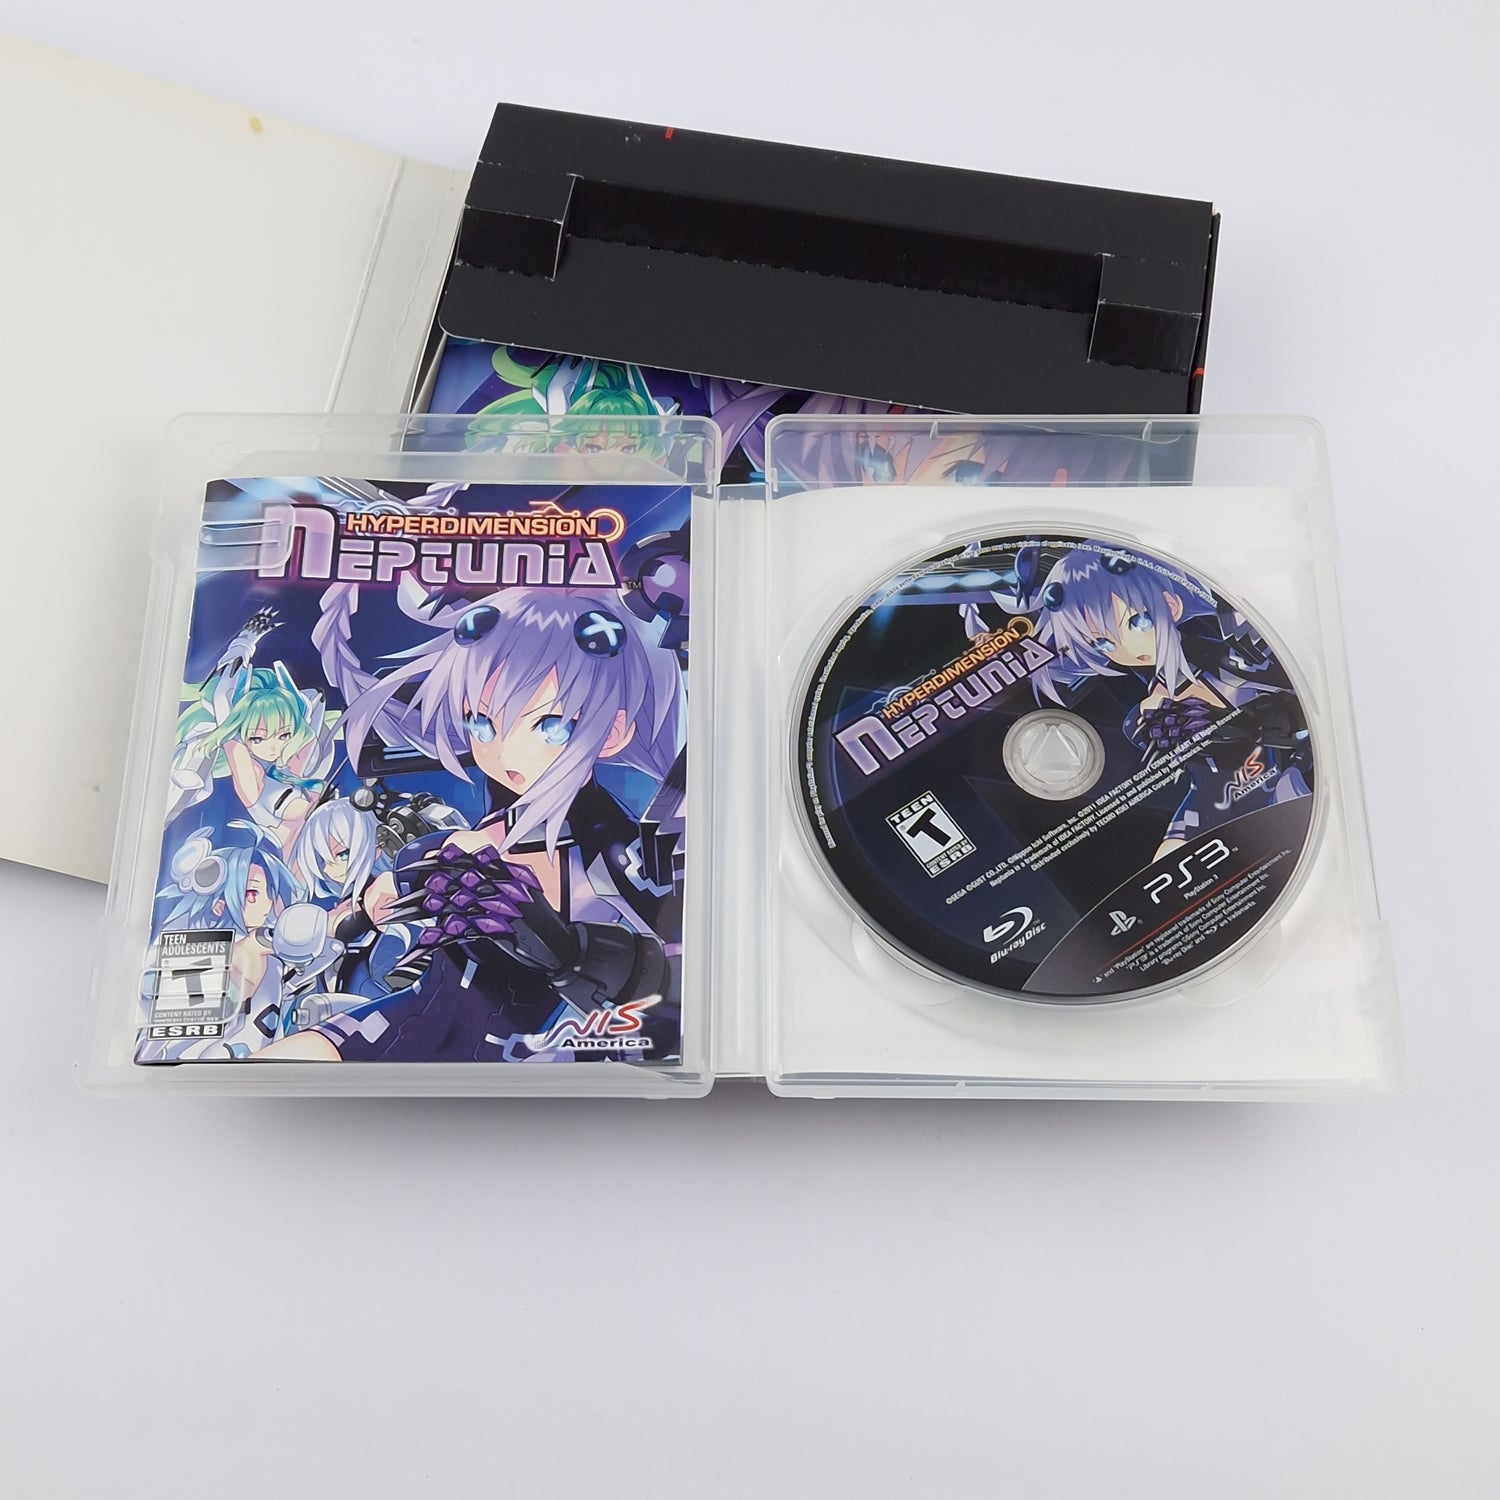 Sony Playstation 3 Spiel : Hyperdimension Neptunia - OVP Anleitung  NTSC USA PS3